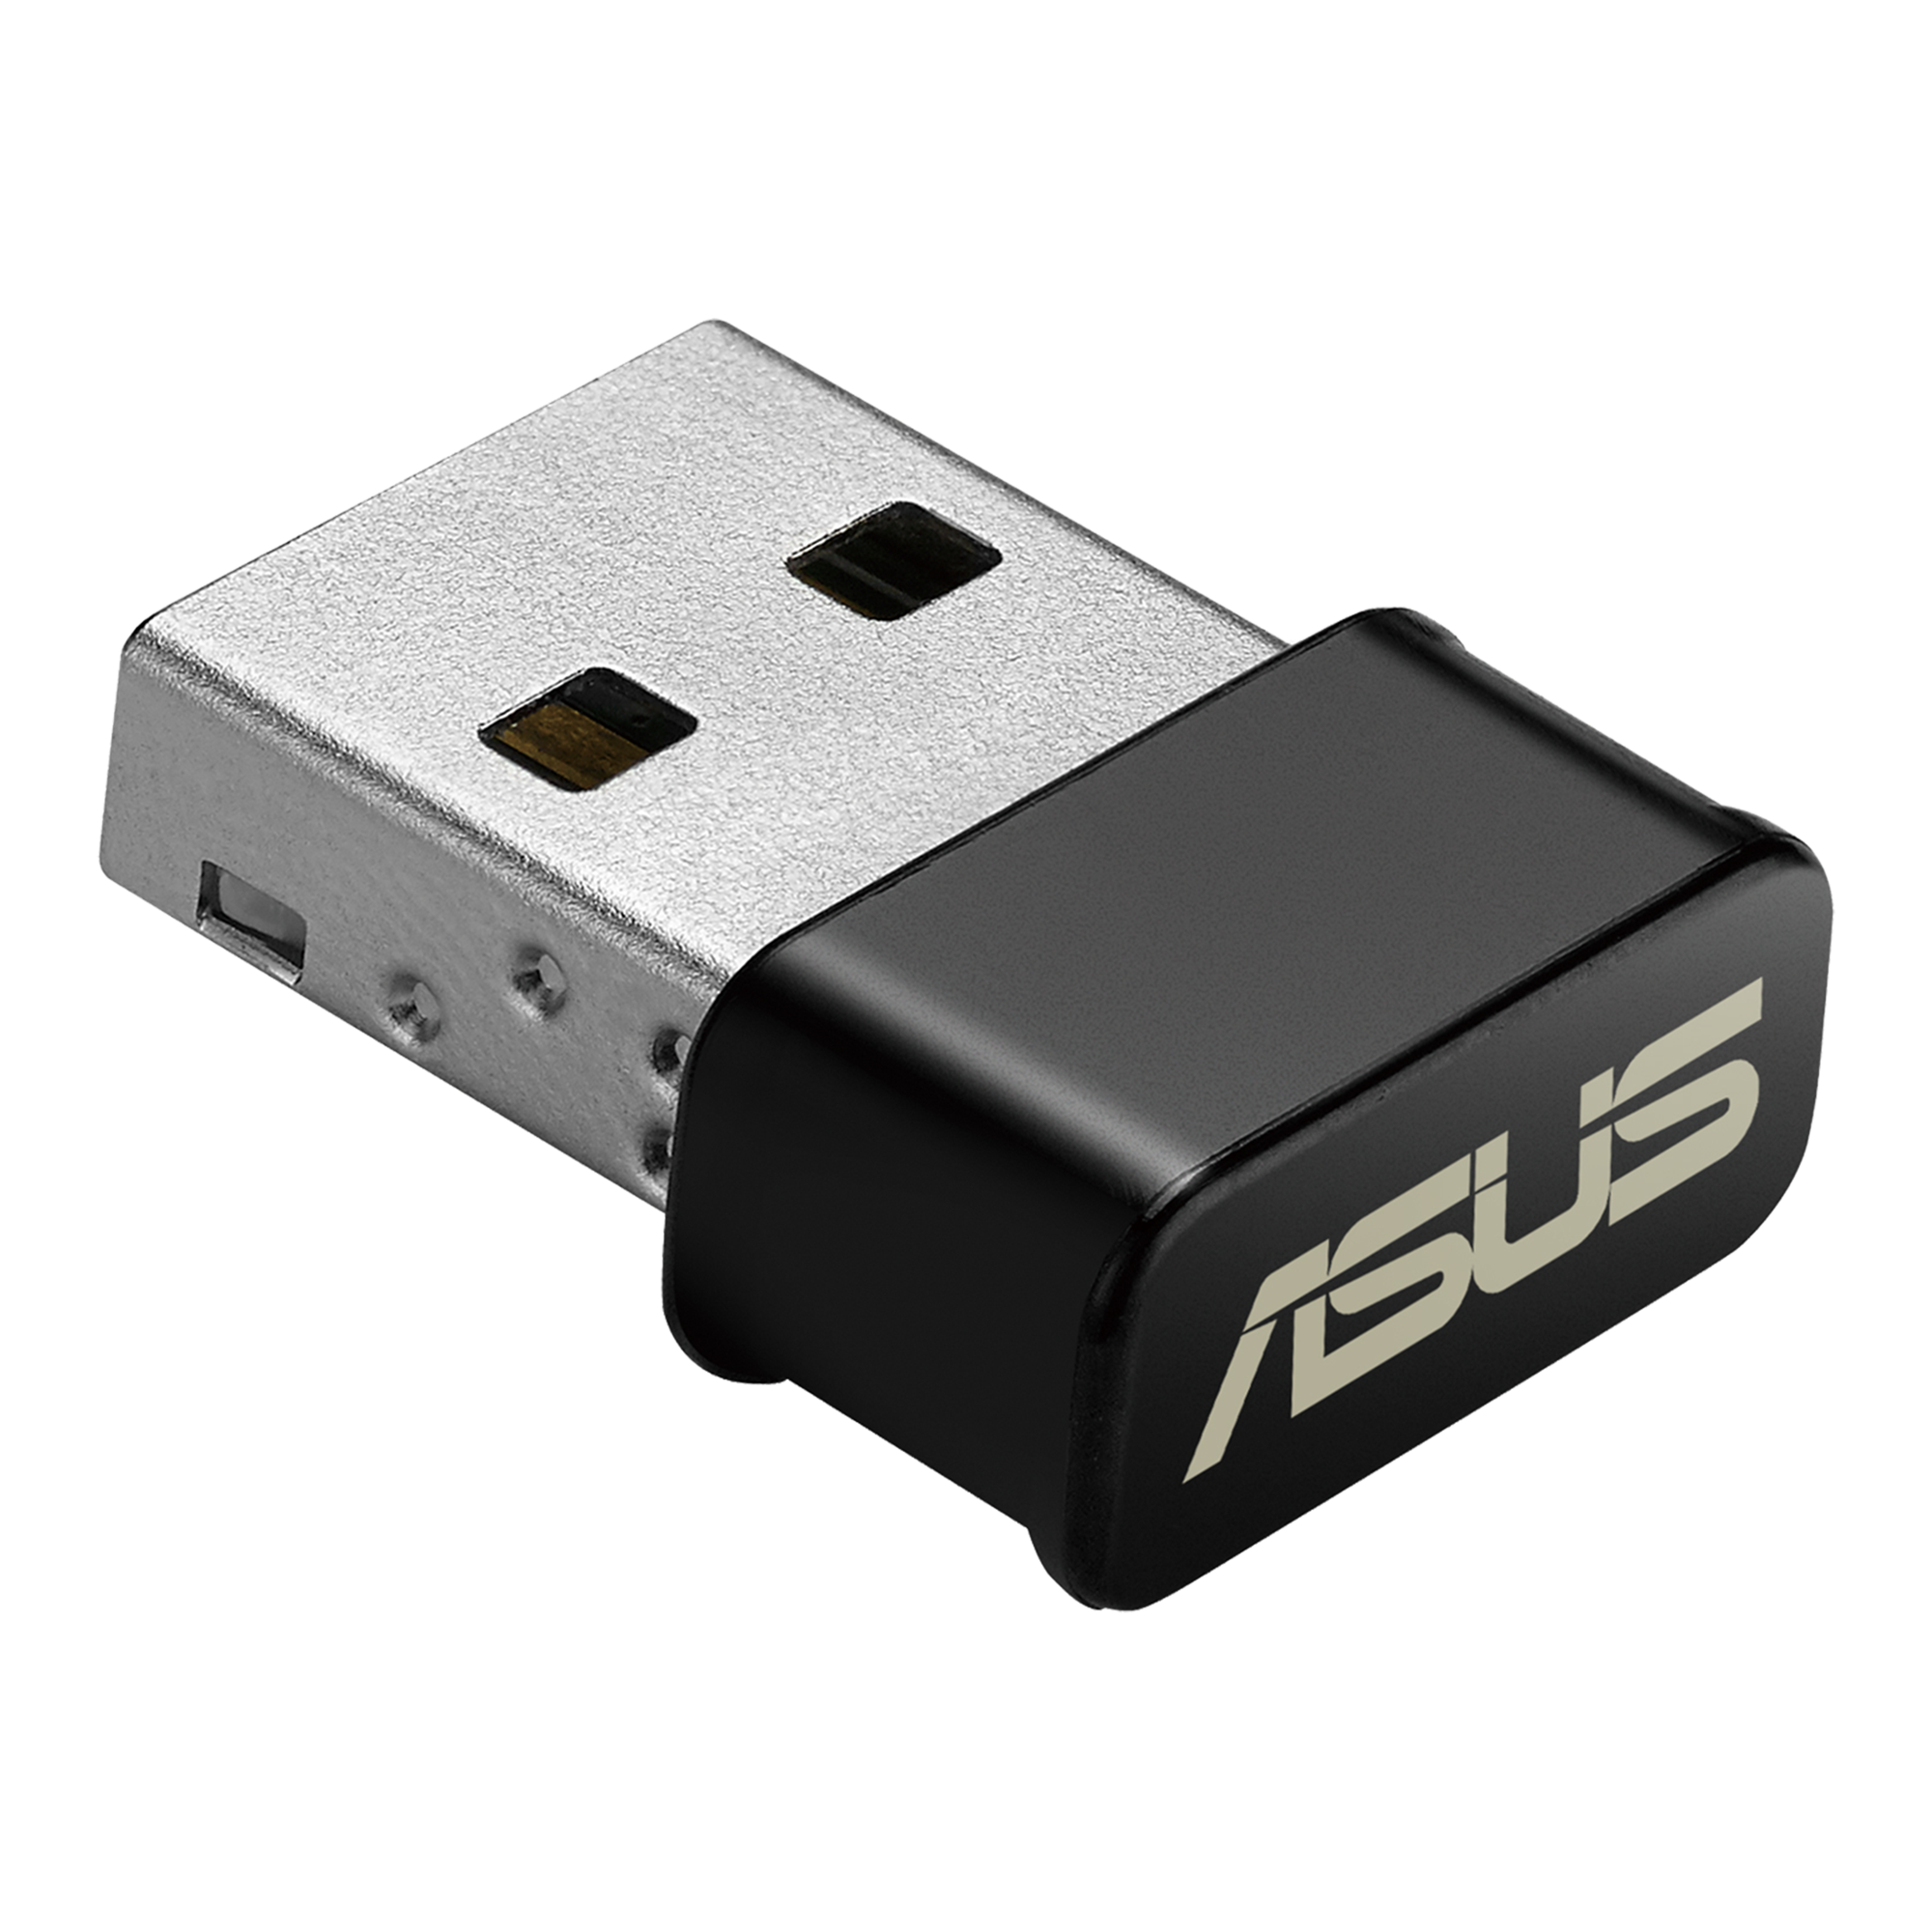 USB-AC53 Global